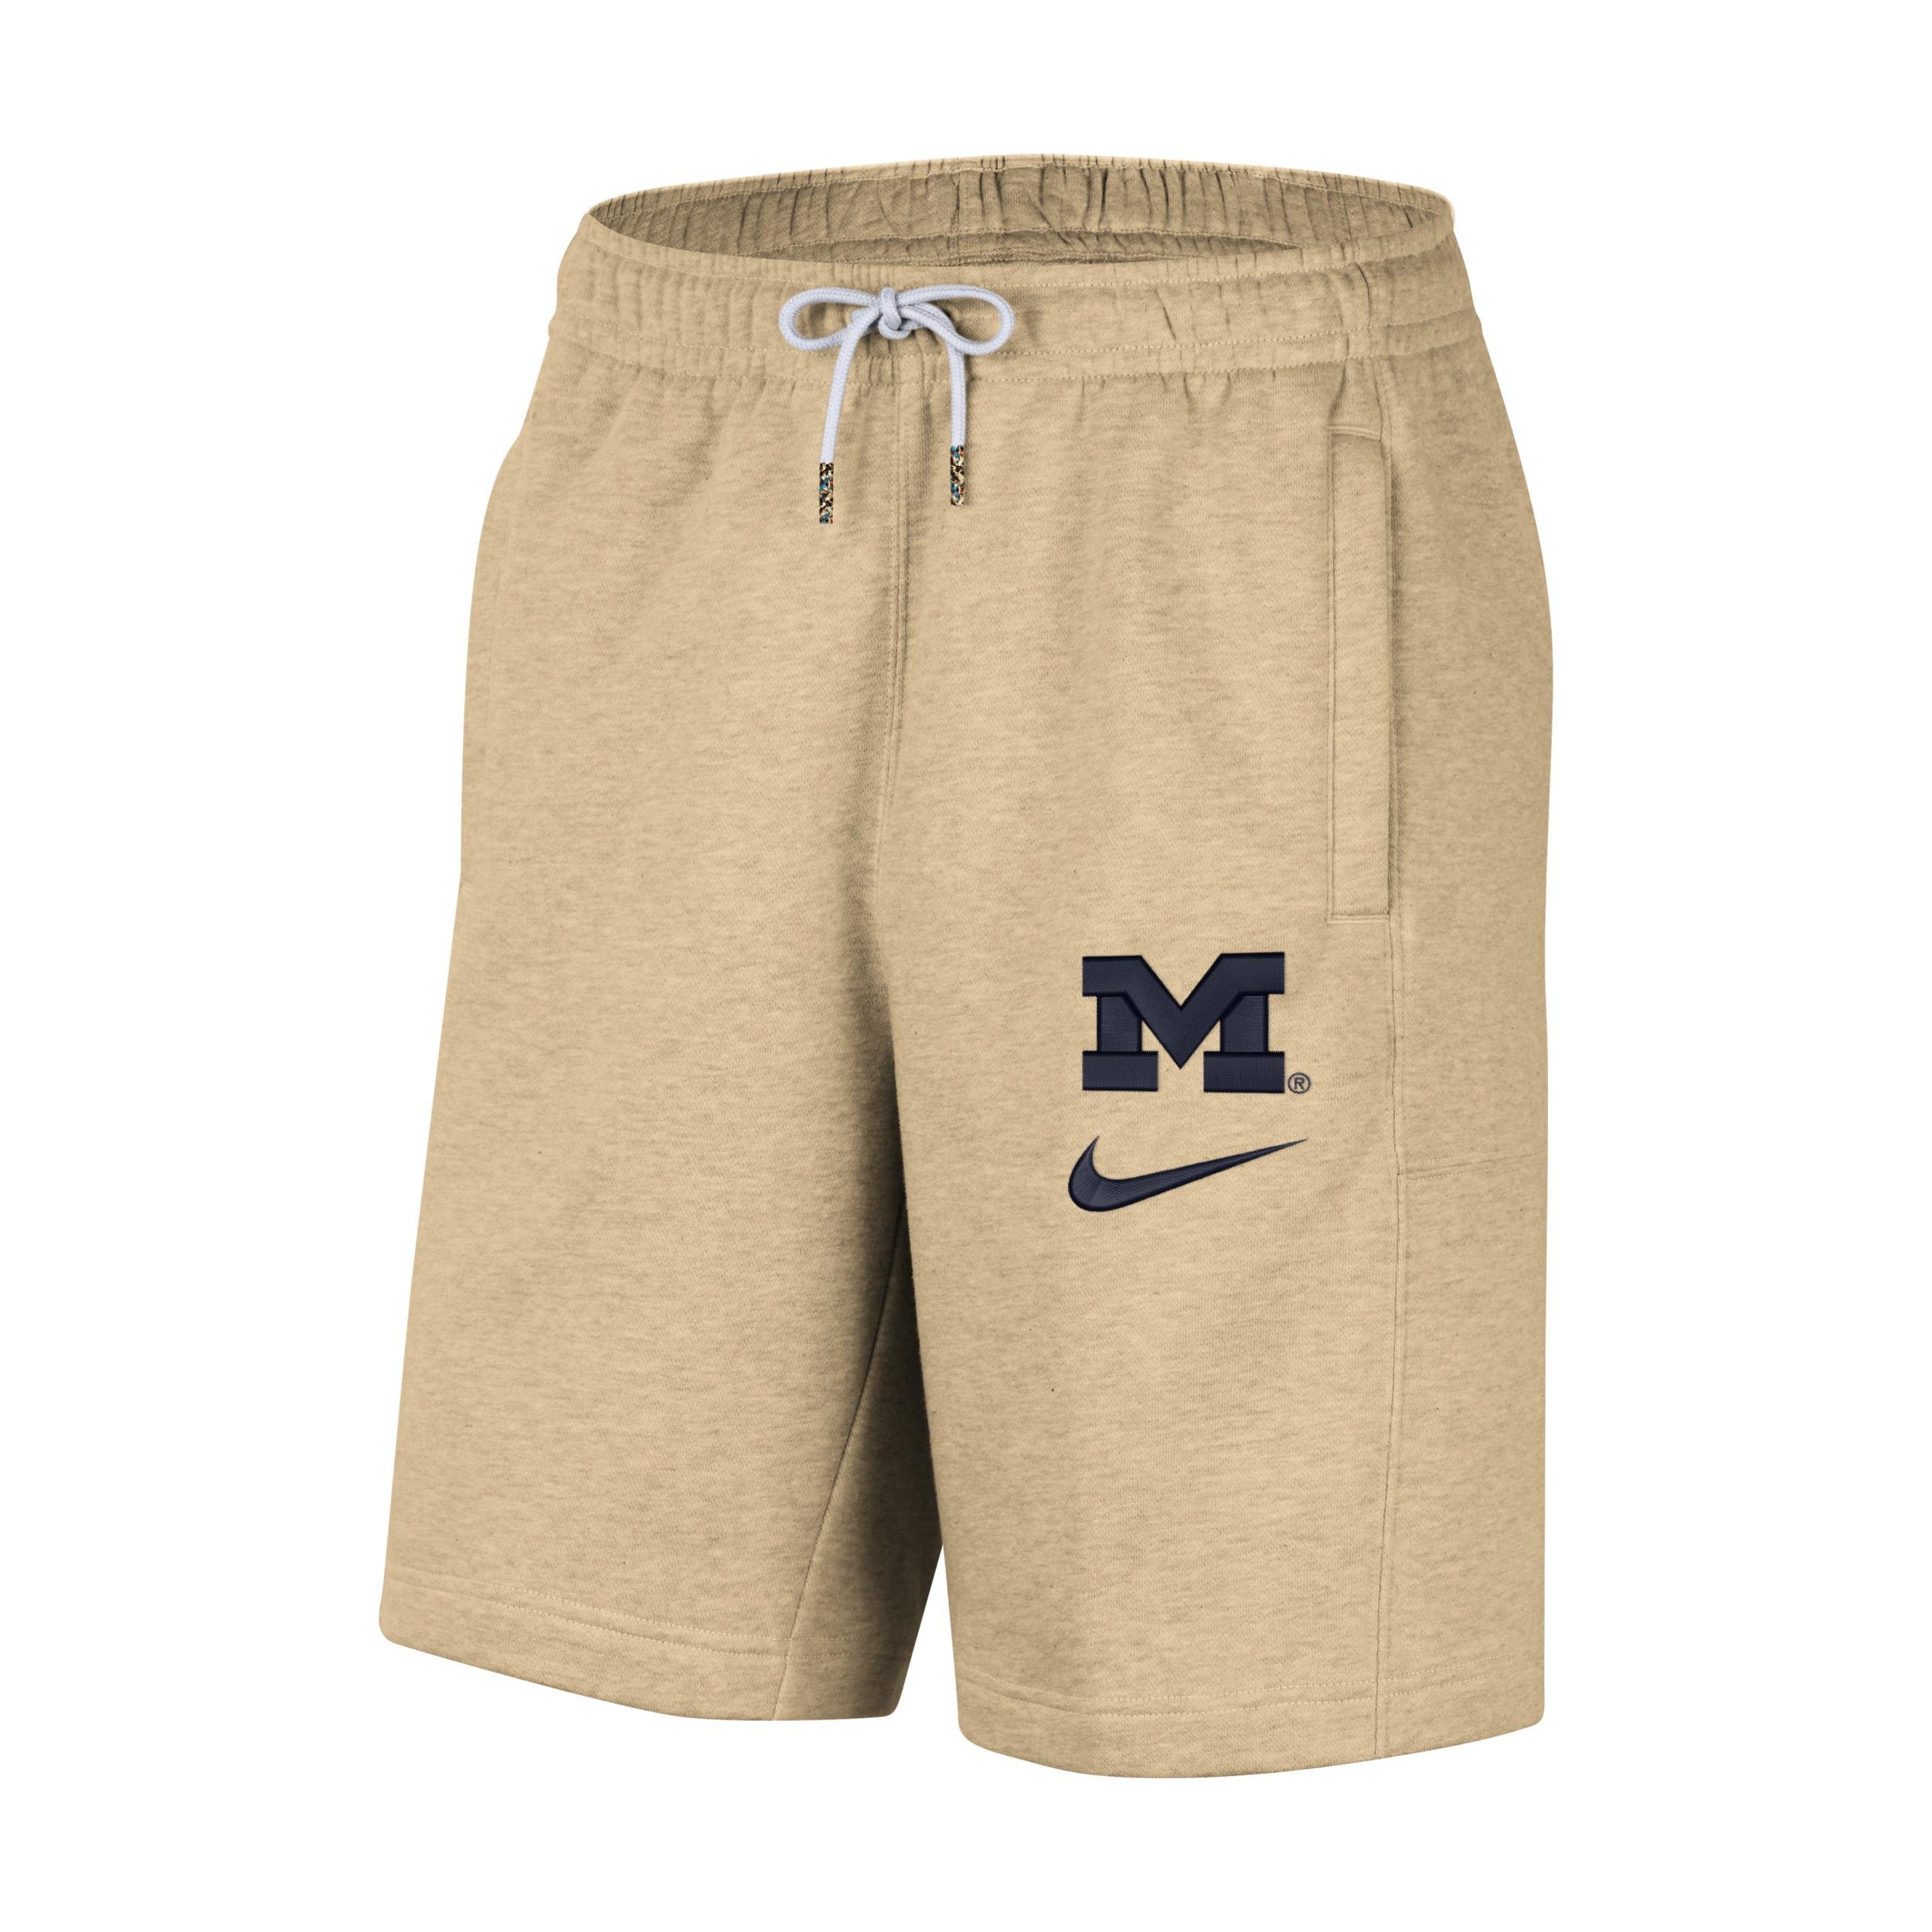 Michigan Nike Men's College Shorts by NIKE